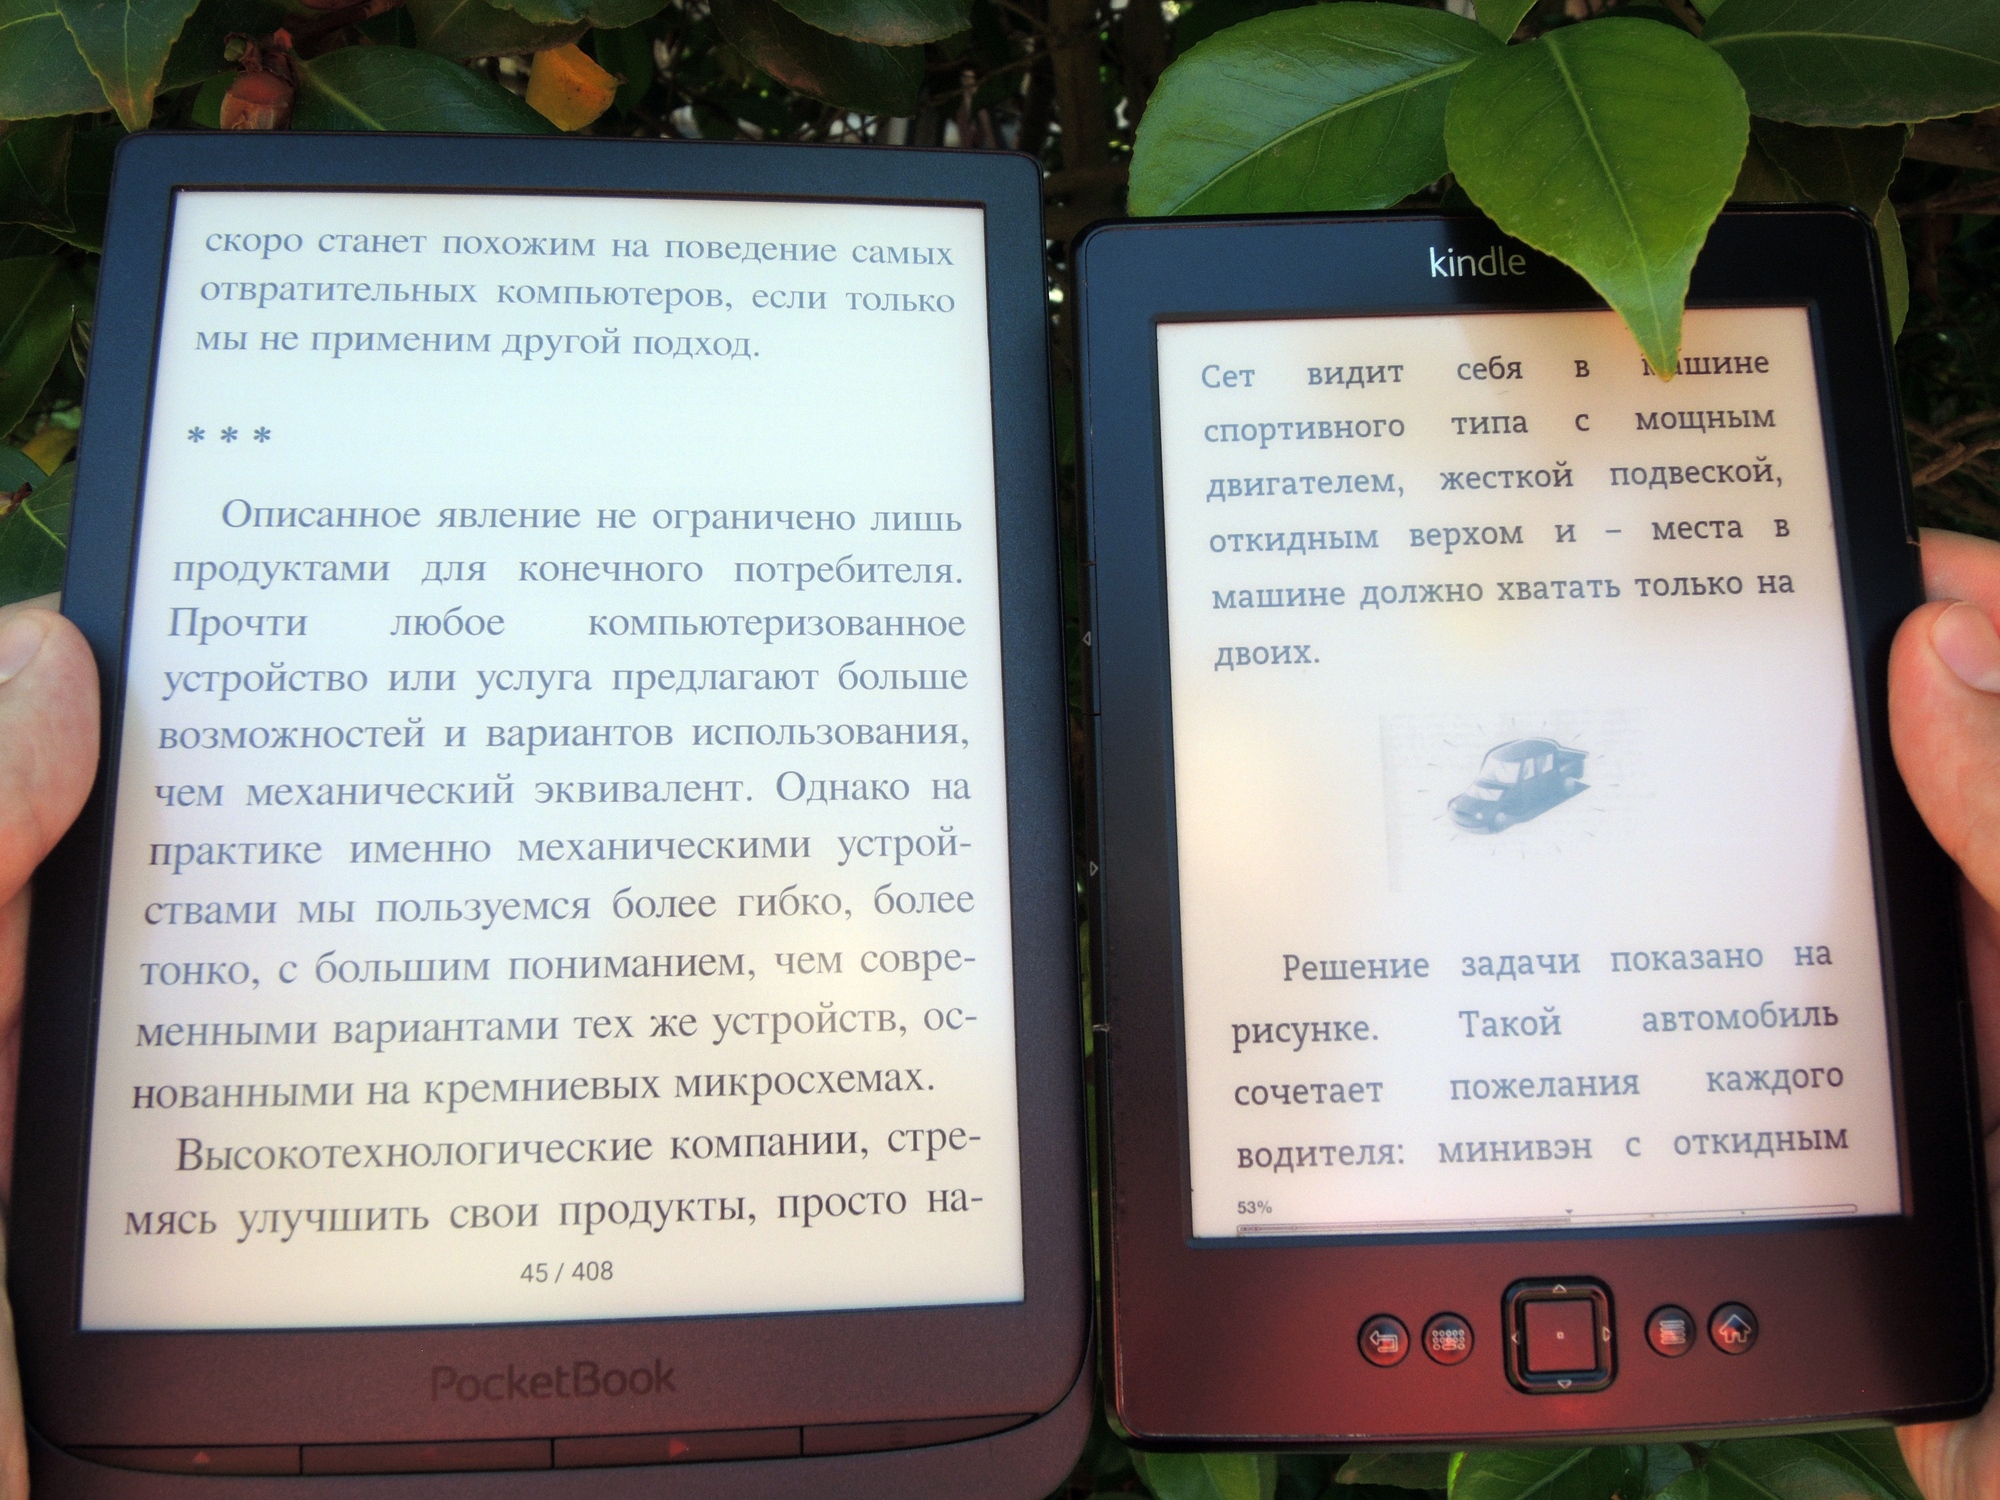 Pocketbook 740 и Kindle 5